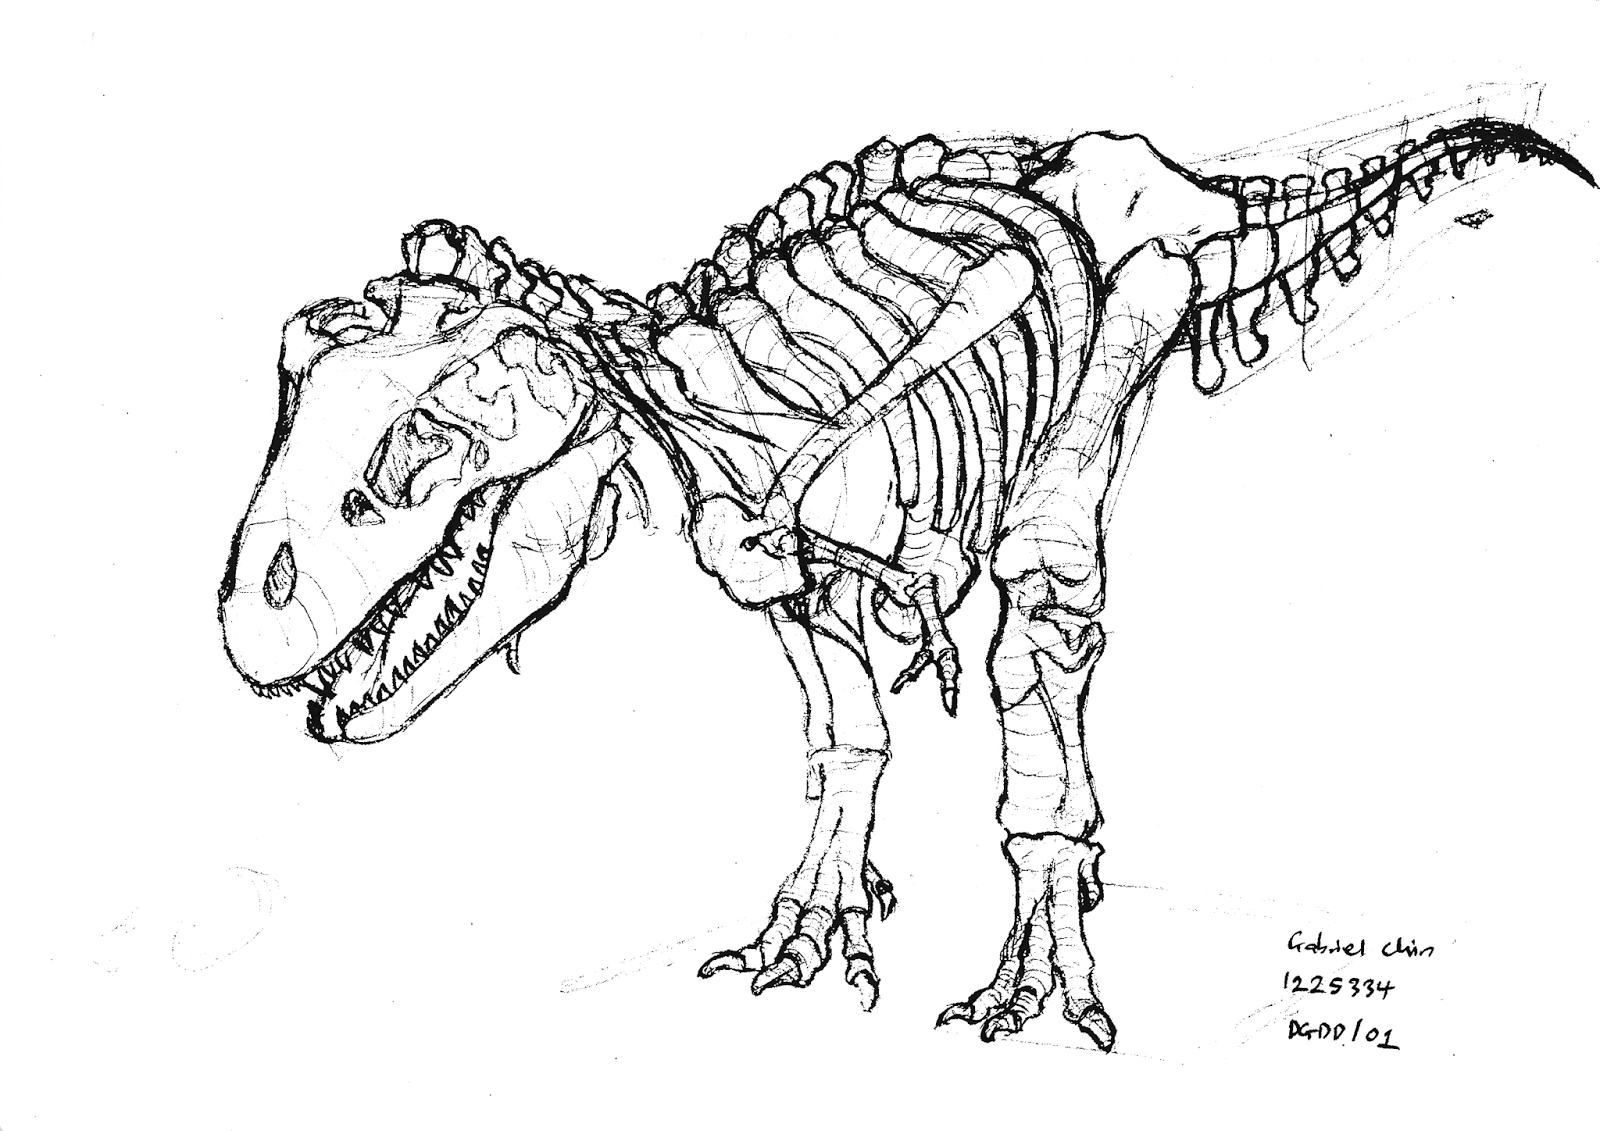 online portfolio: pencil sketch - t-rex